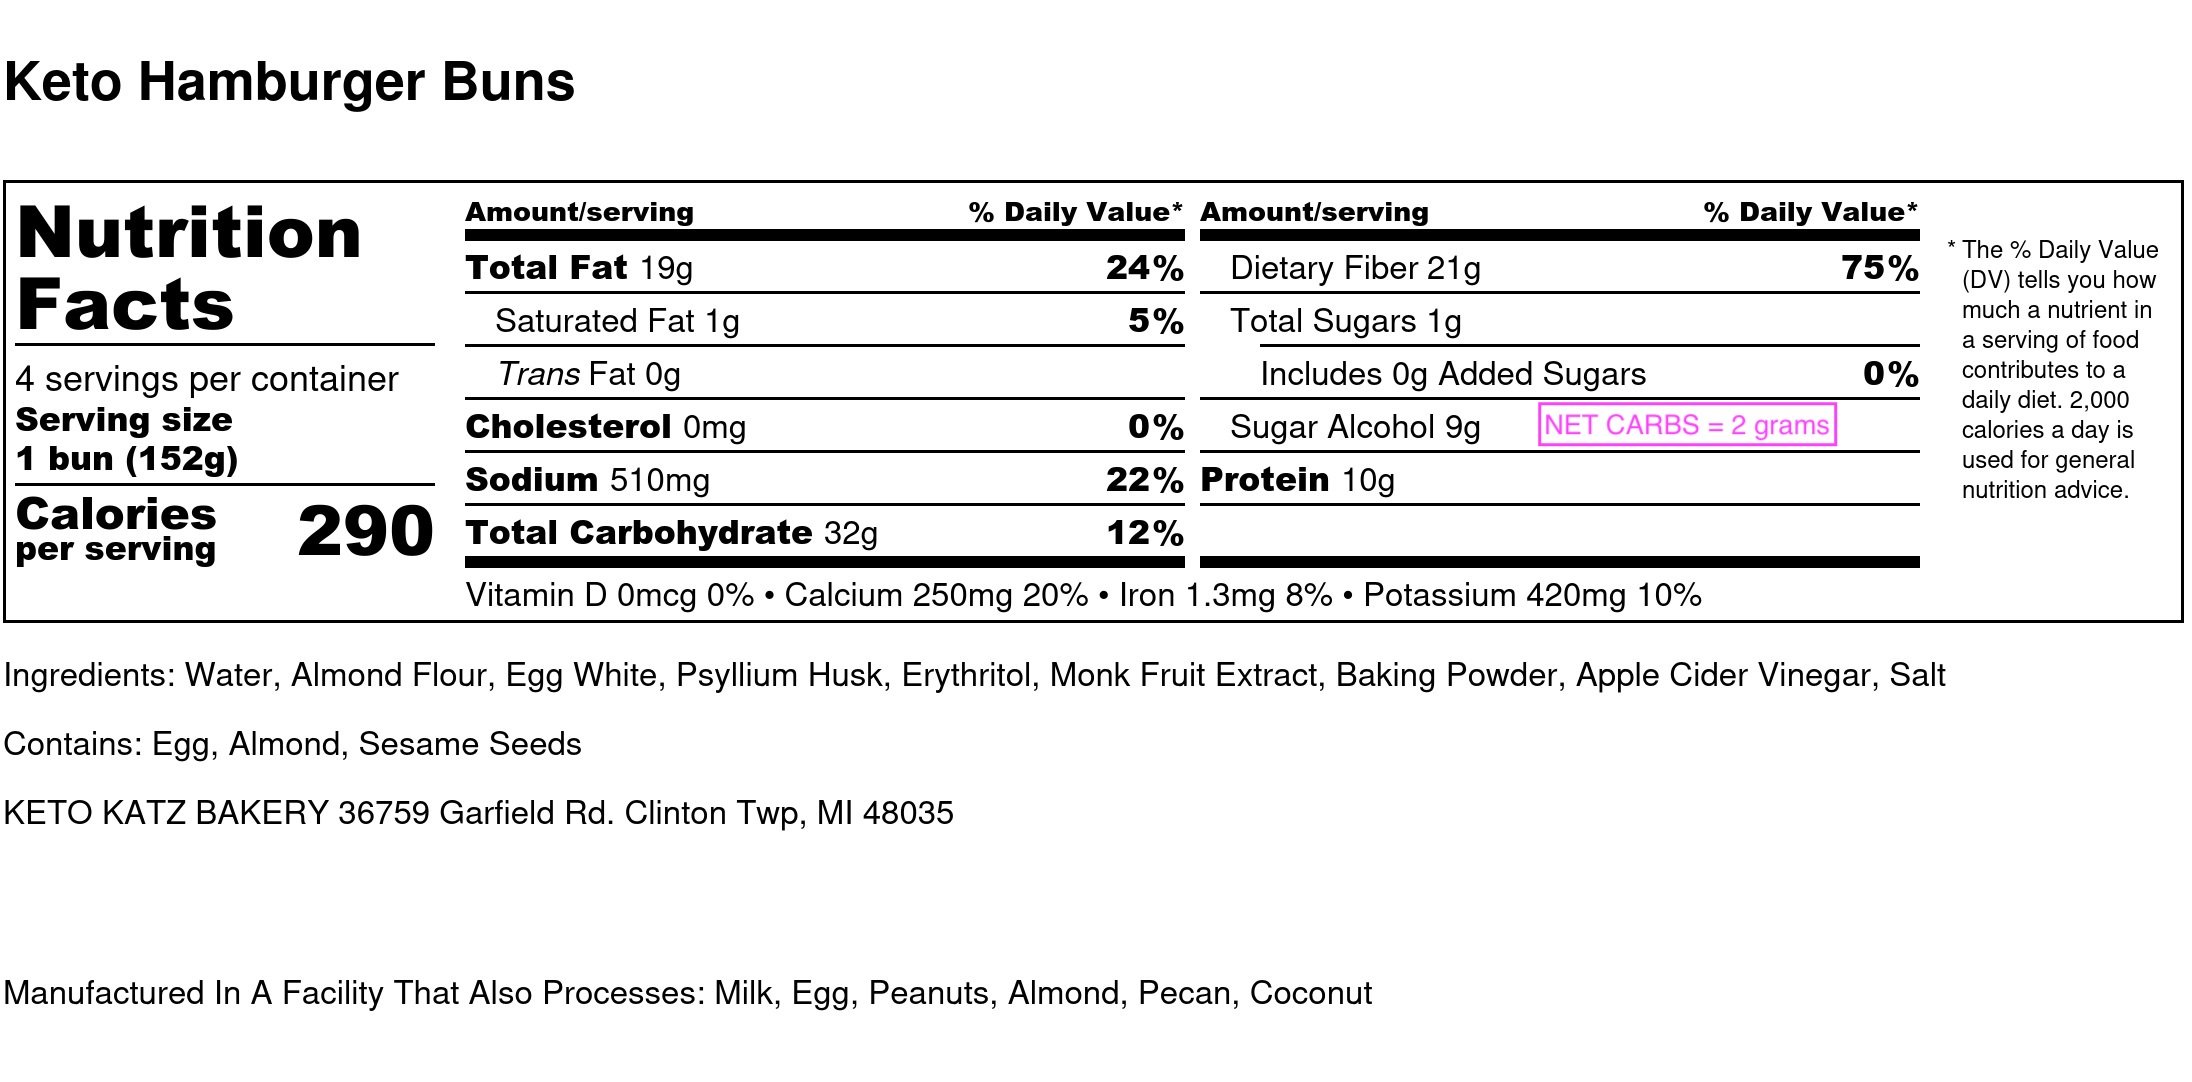 Keto Hamburger Buns - Nutrition Label.jpg